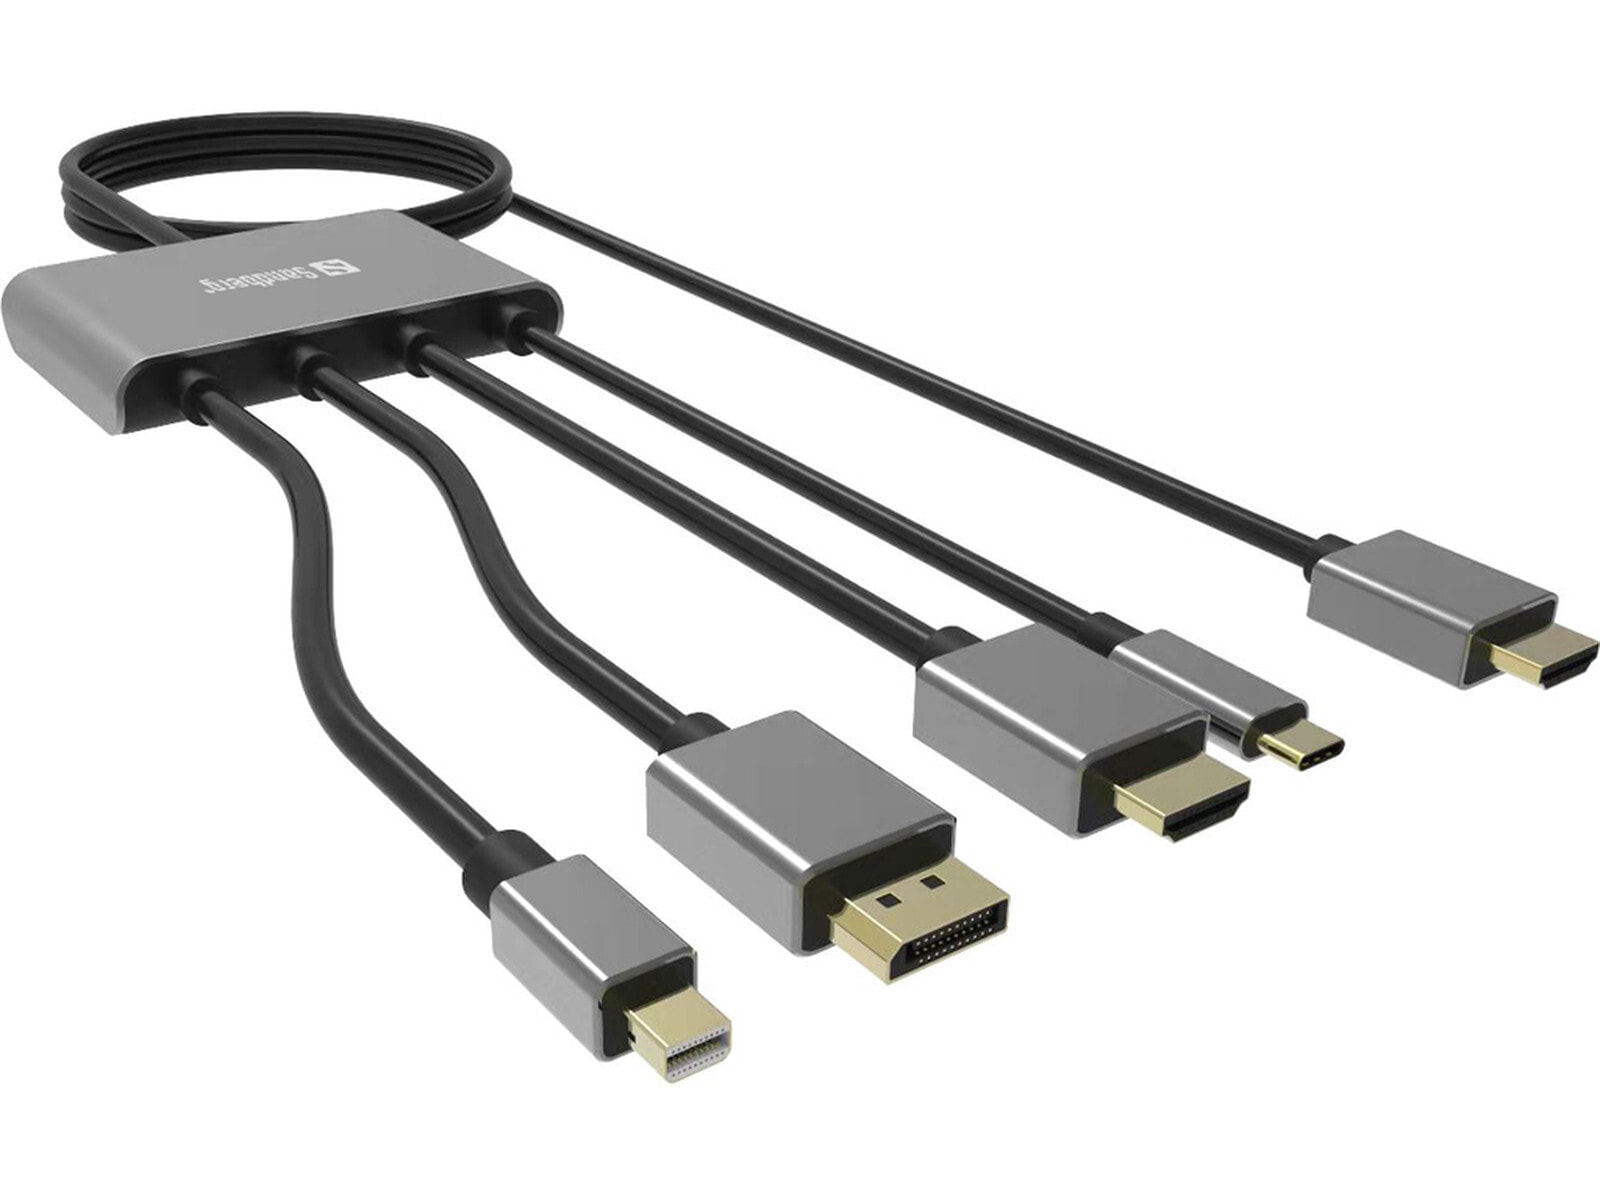 Sandberg 509-21 видео кабель адаптер 2 m HDMI Тип A (Стандарт) DisplayPort + Mini DisplayPort + HDMI + USB Type-C Черный